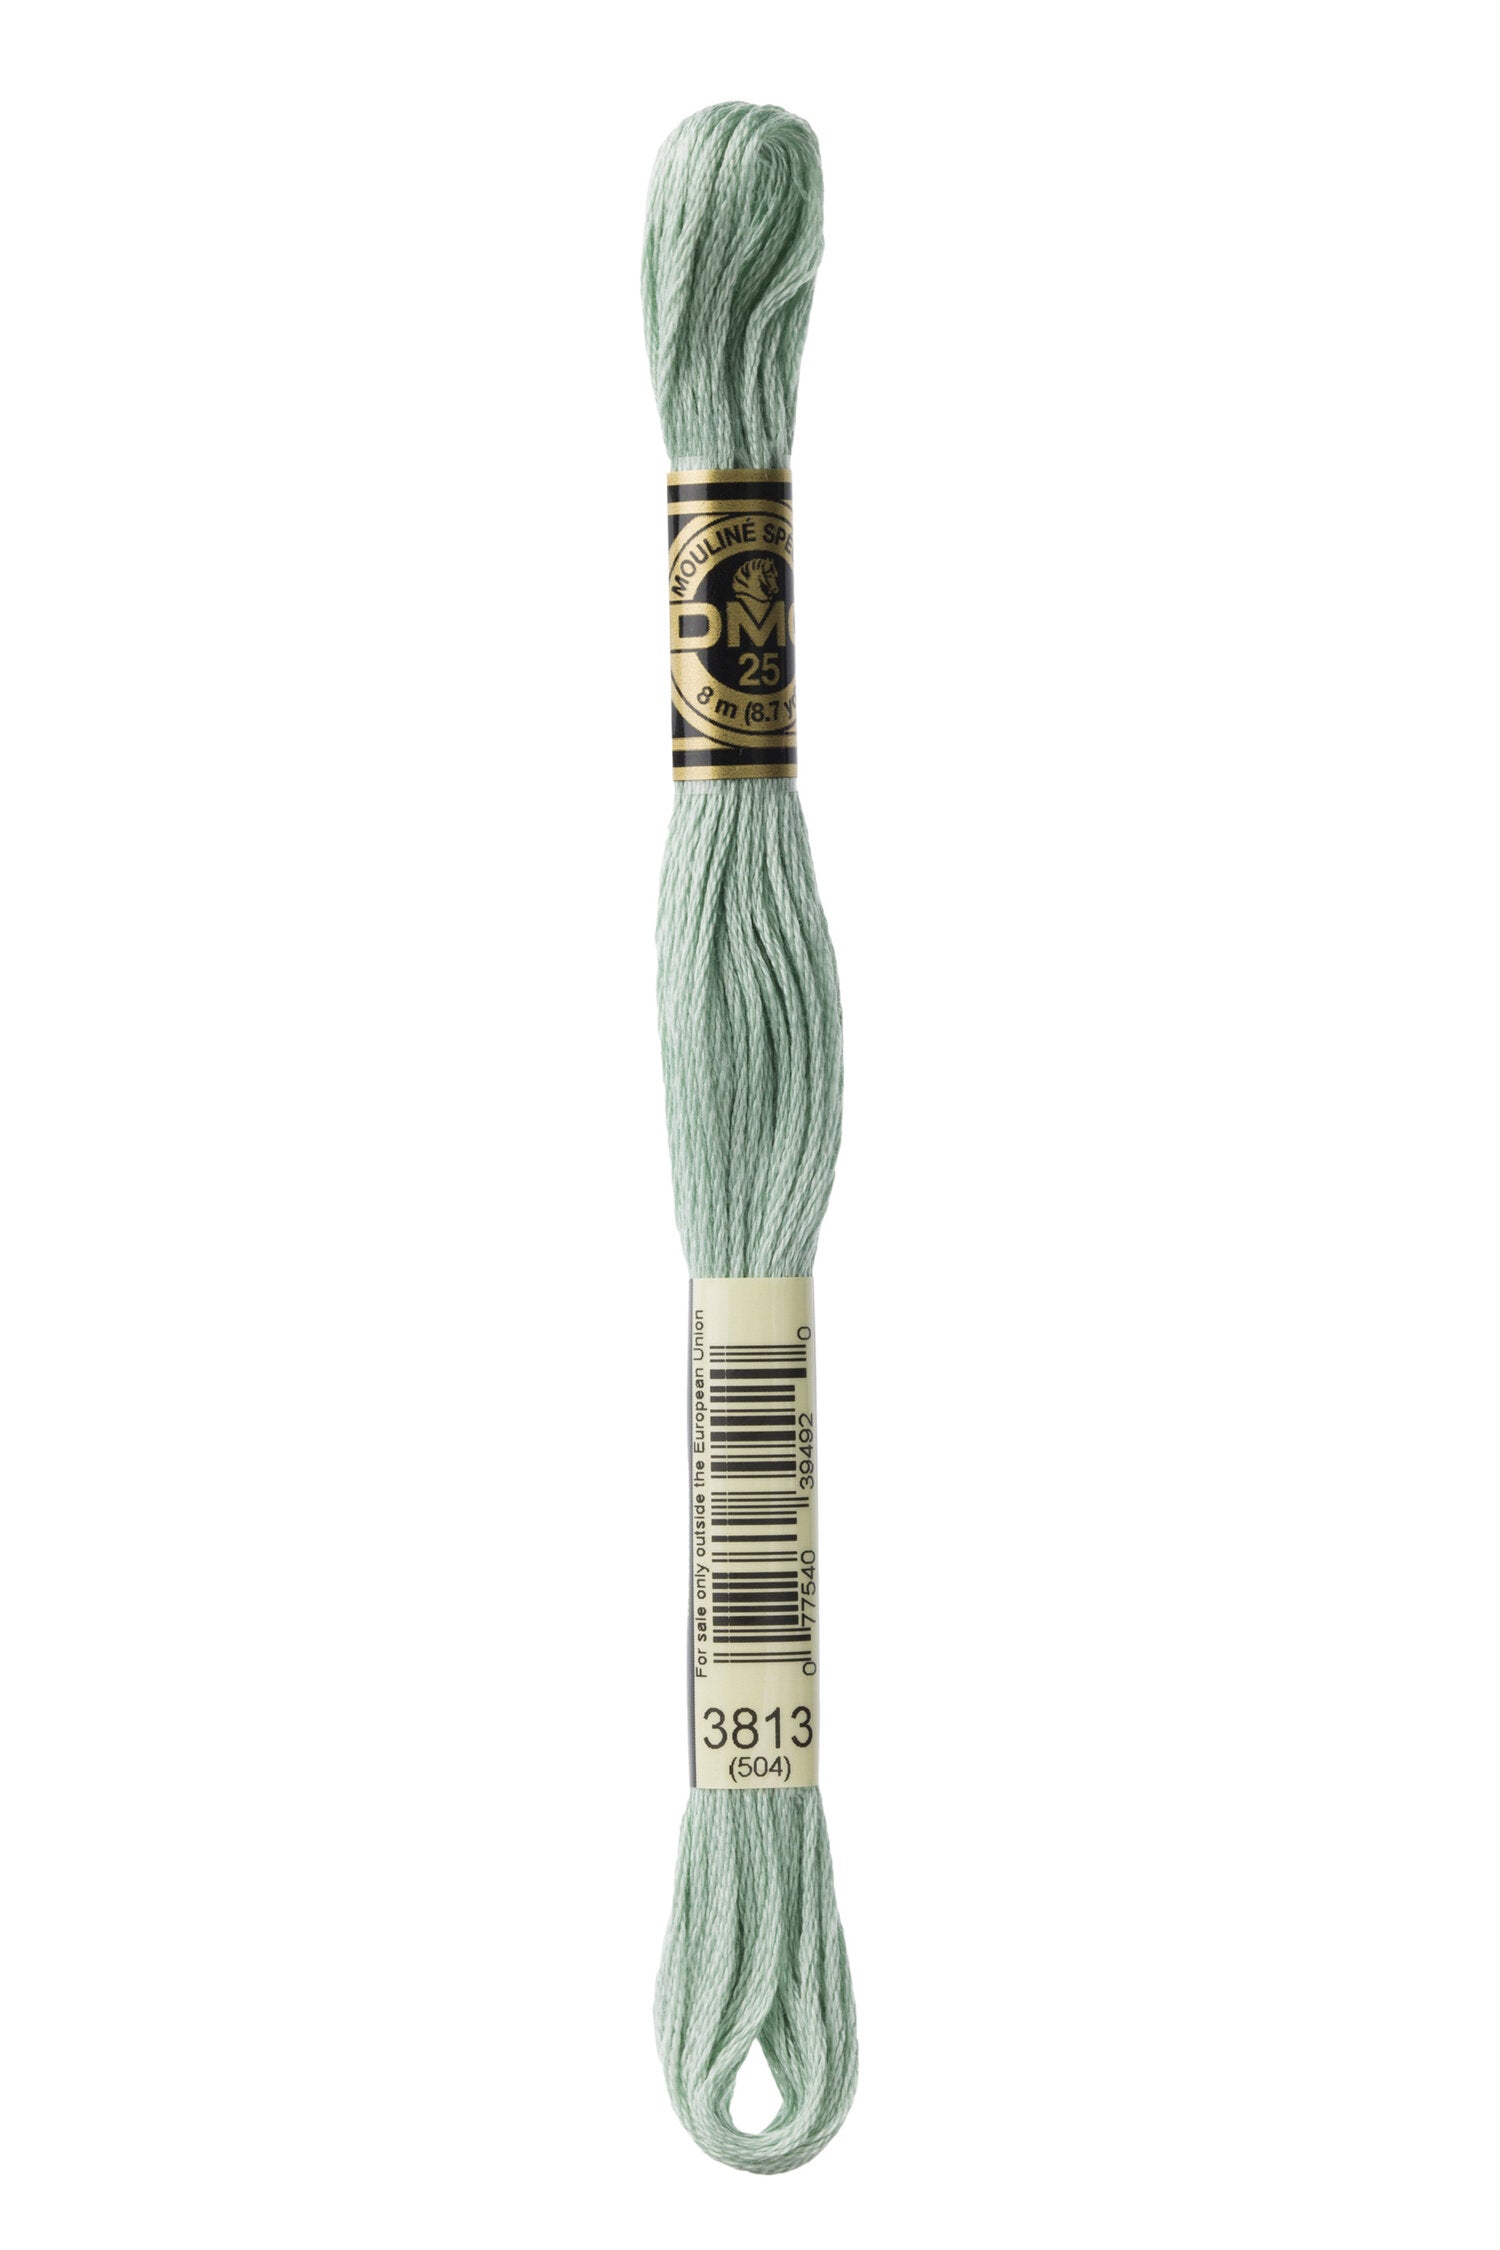 DMC 3813 - Blue Green - Light - DMC 6 Strand Embroidery Thread, Thread & Floss, Thread & Floss, The Crafty Grimalkin - A Cross Stitch Store